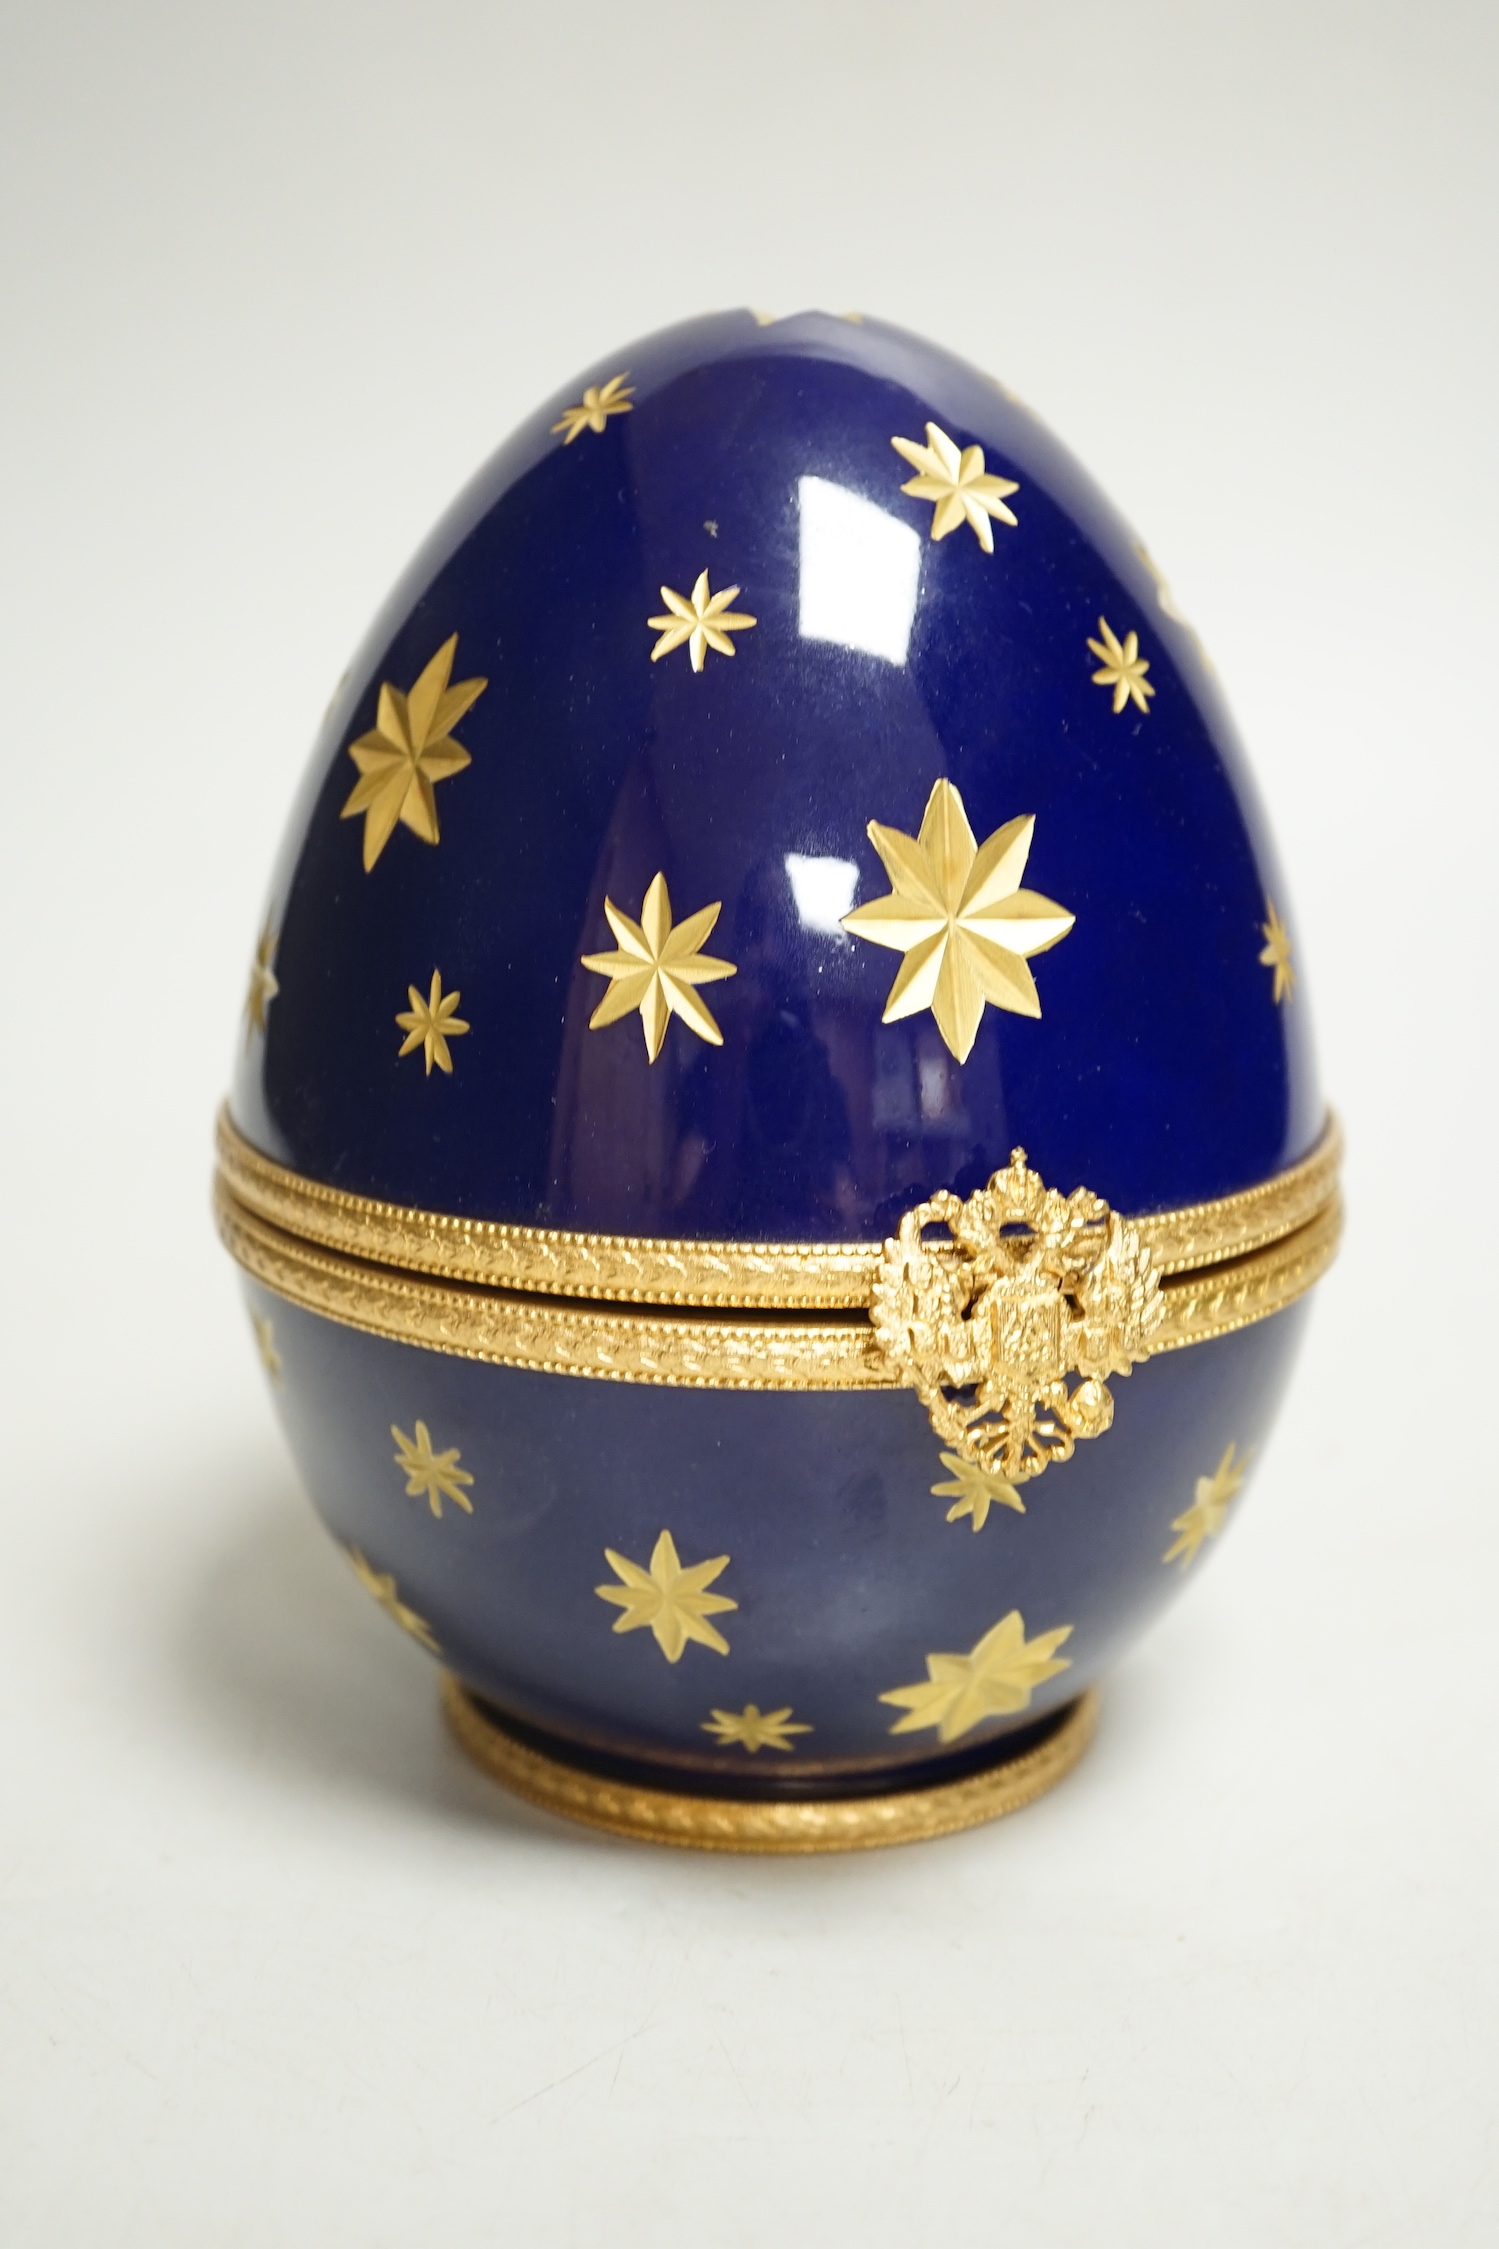 A Limoges for Faberge egg-shaped casket, Limited edition, 15cm high